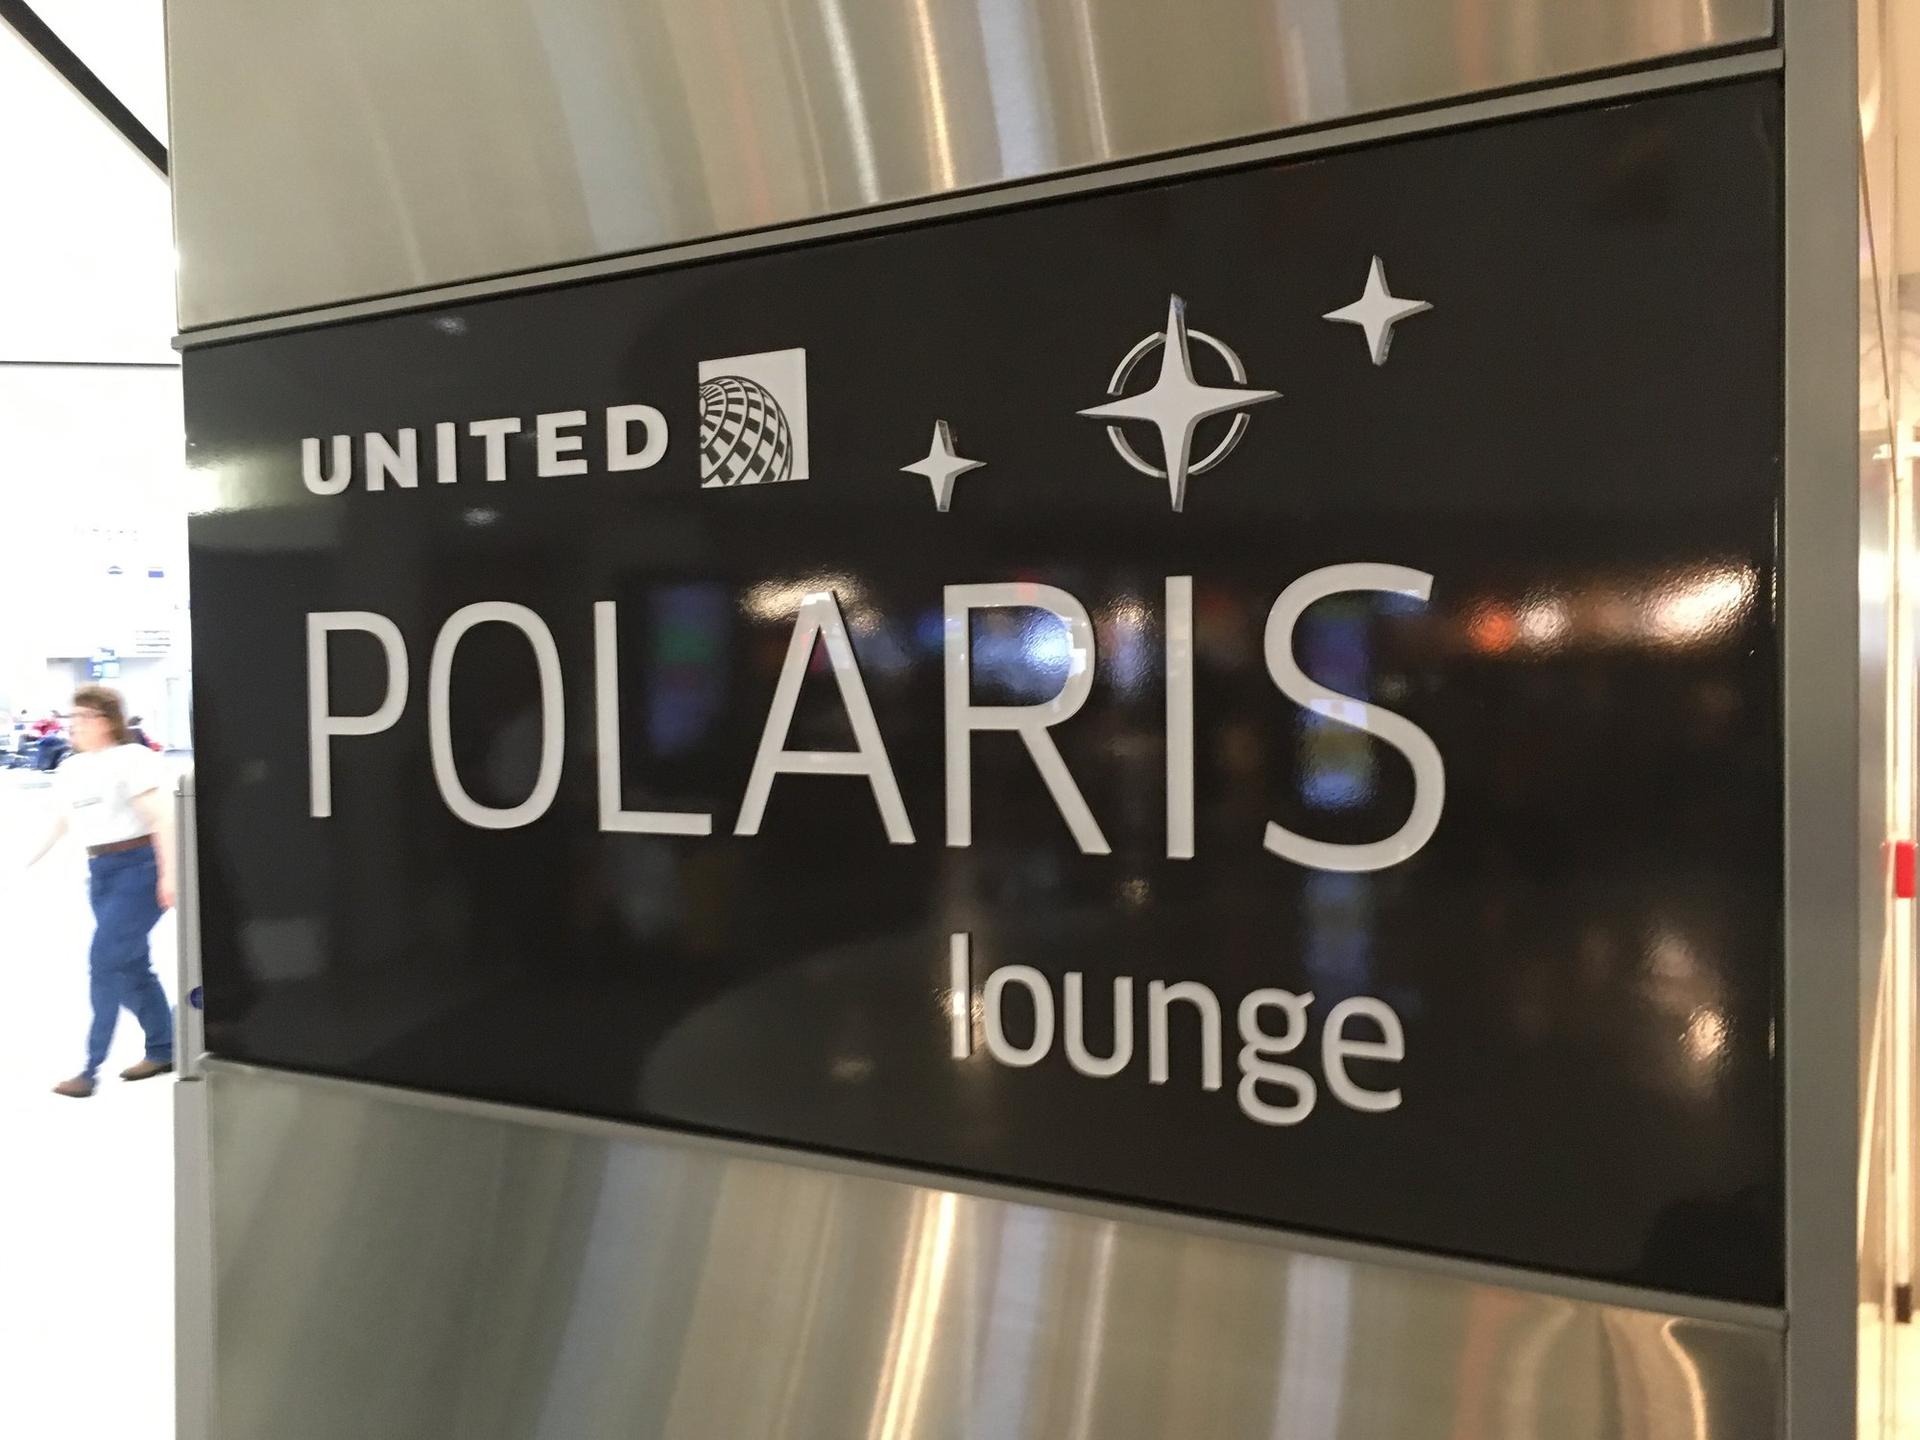 United Airlines Polaris Lounge image 59 of 84